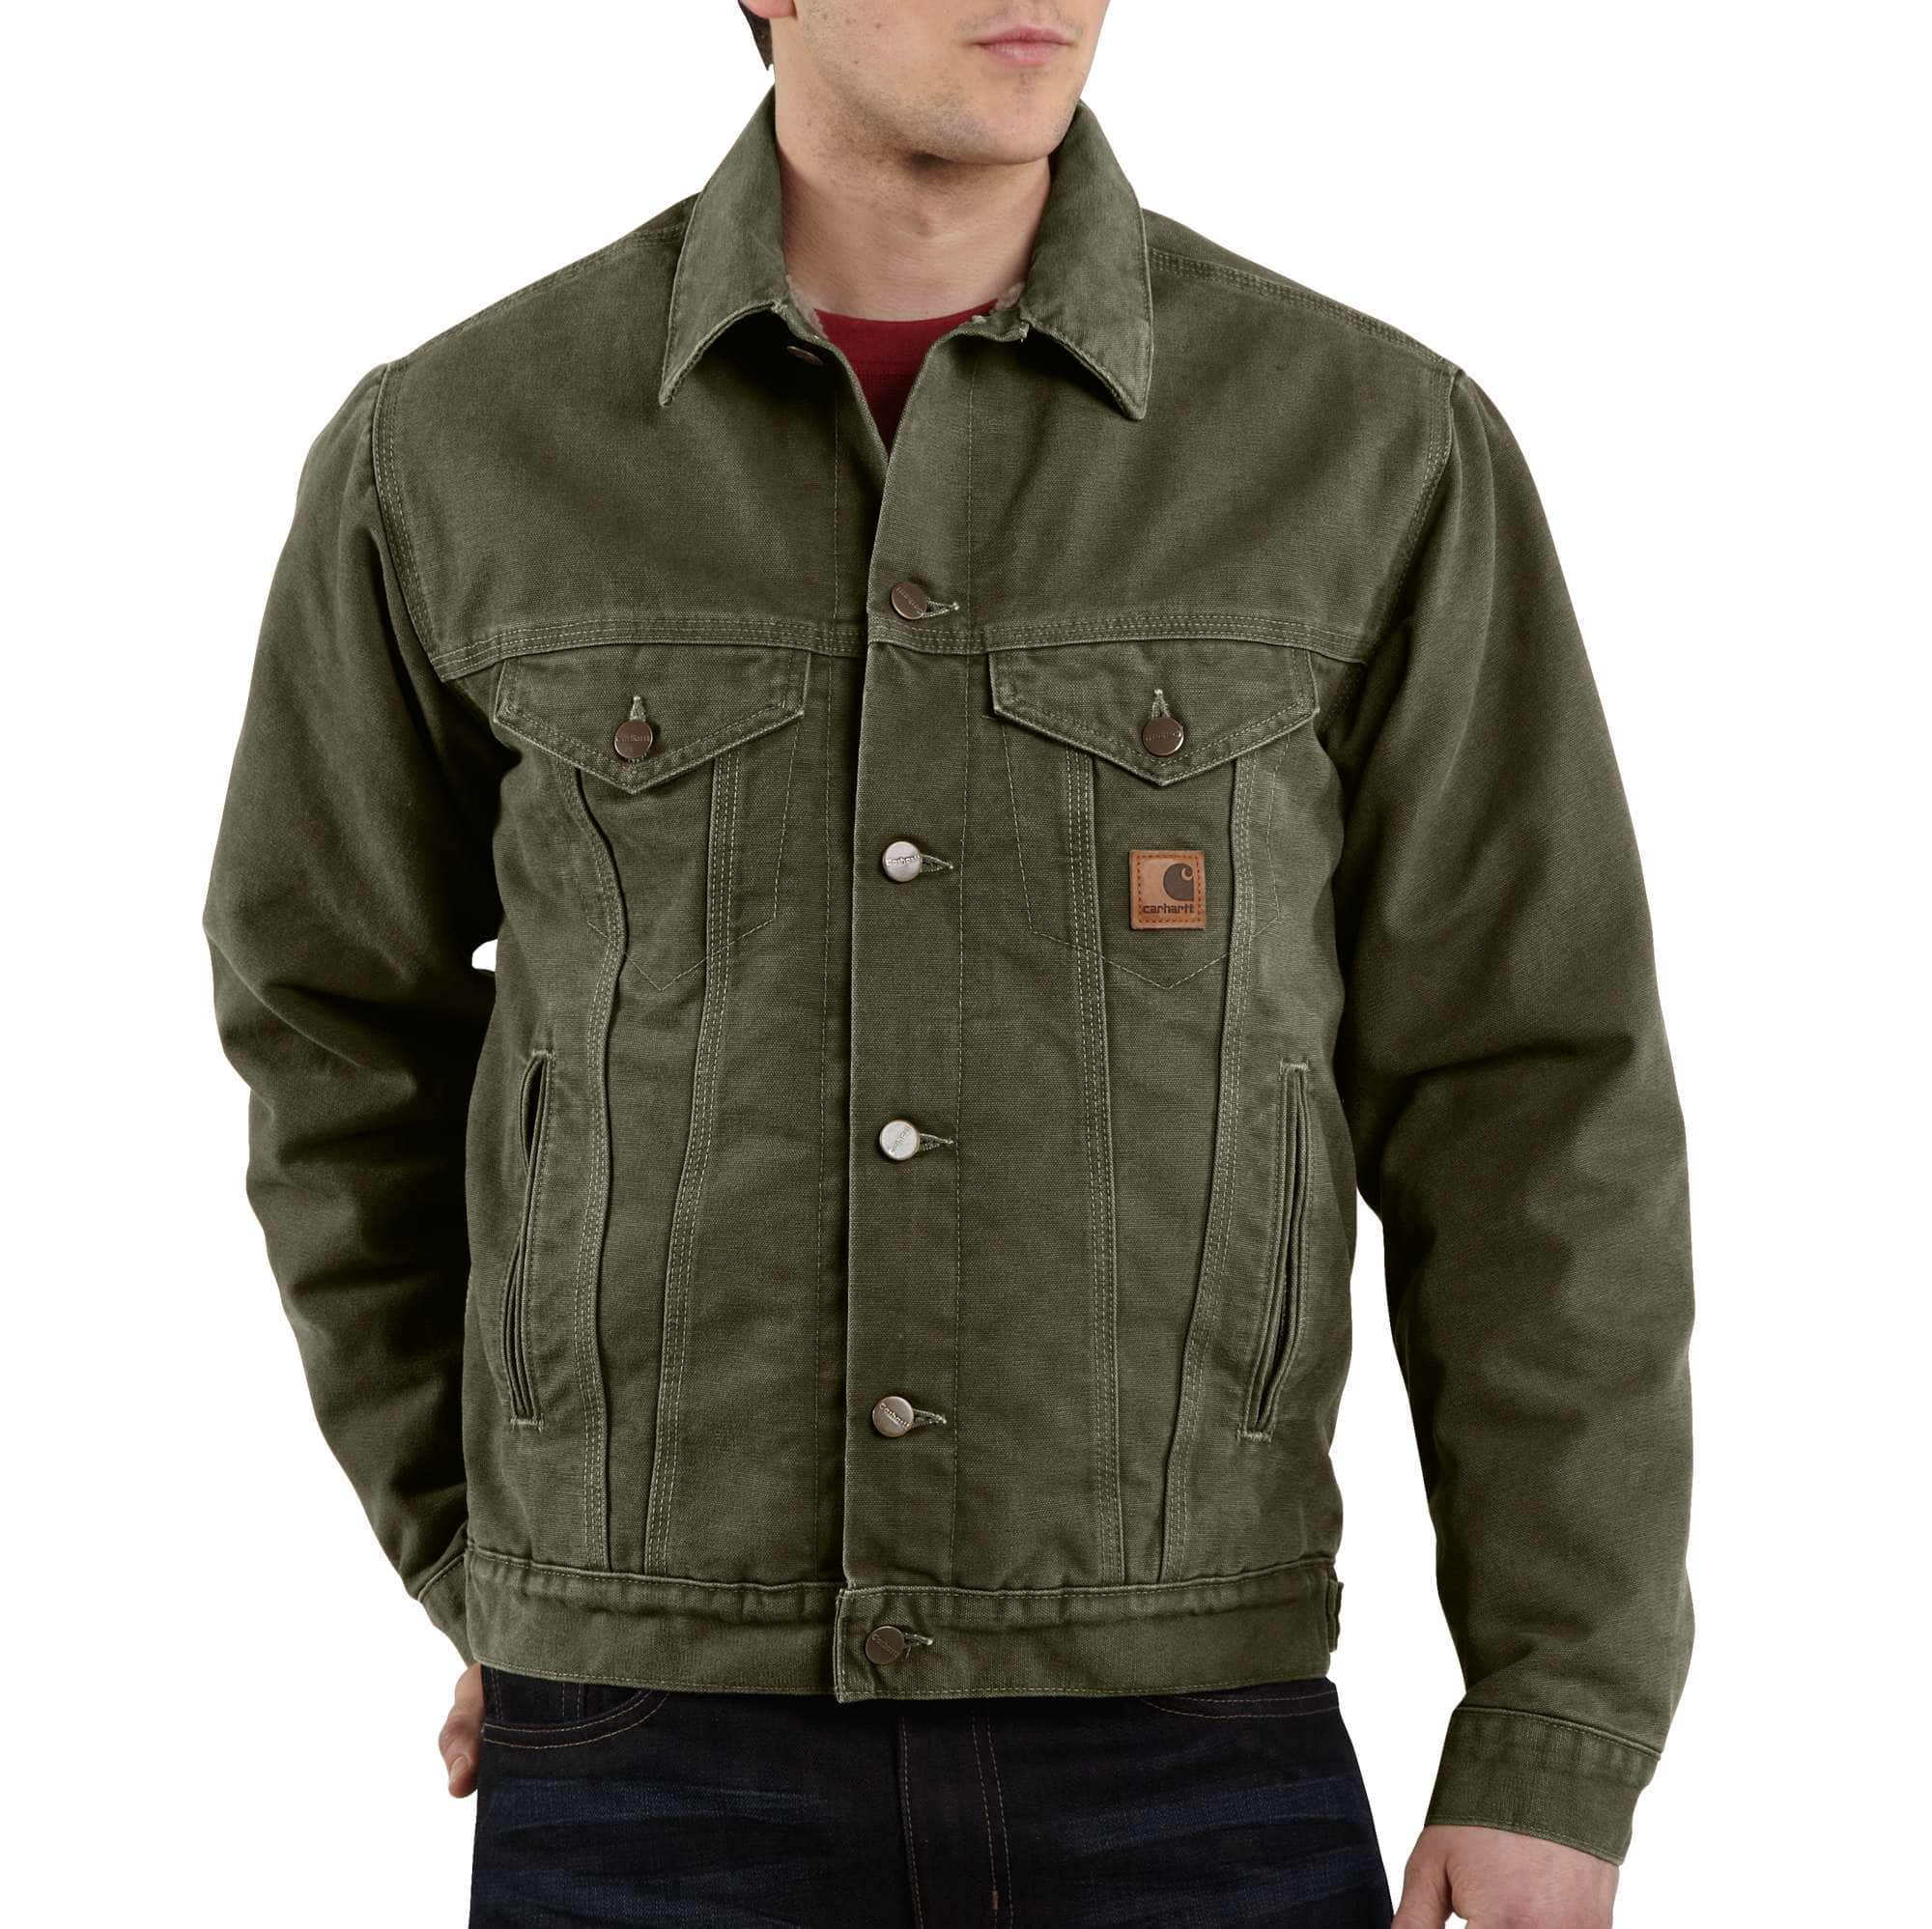 carhartt sherpa lined denim jacket